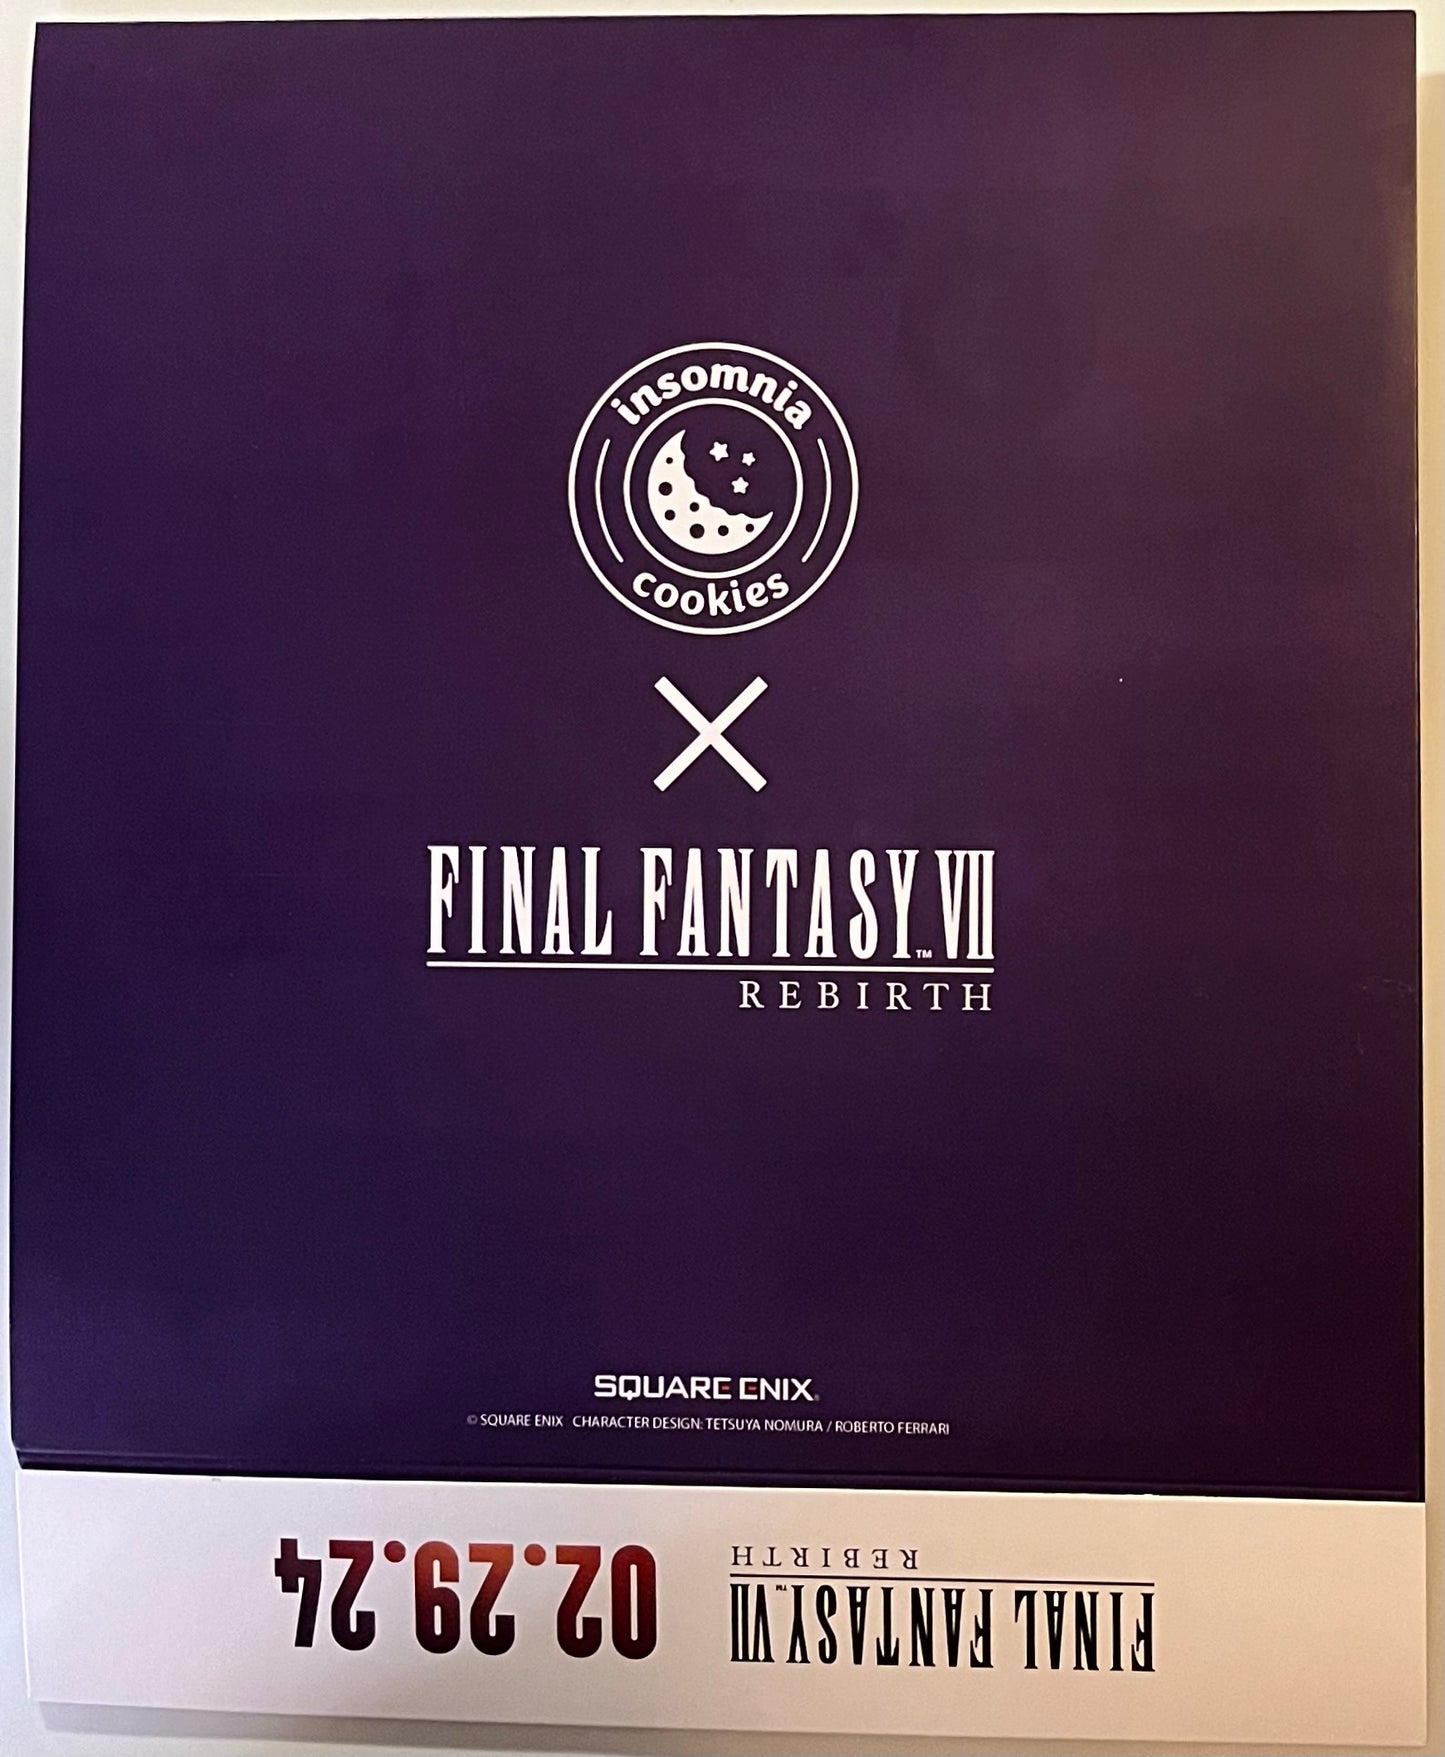 Insomnia Cookies Final Fantasy VII (7) Rebirth Aerith Gainsborough & Tifa Lockhart Limited Edition Cookie Box Sleeve